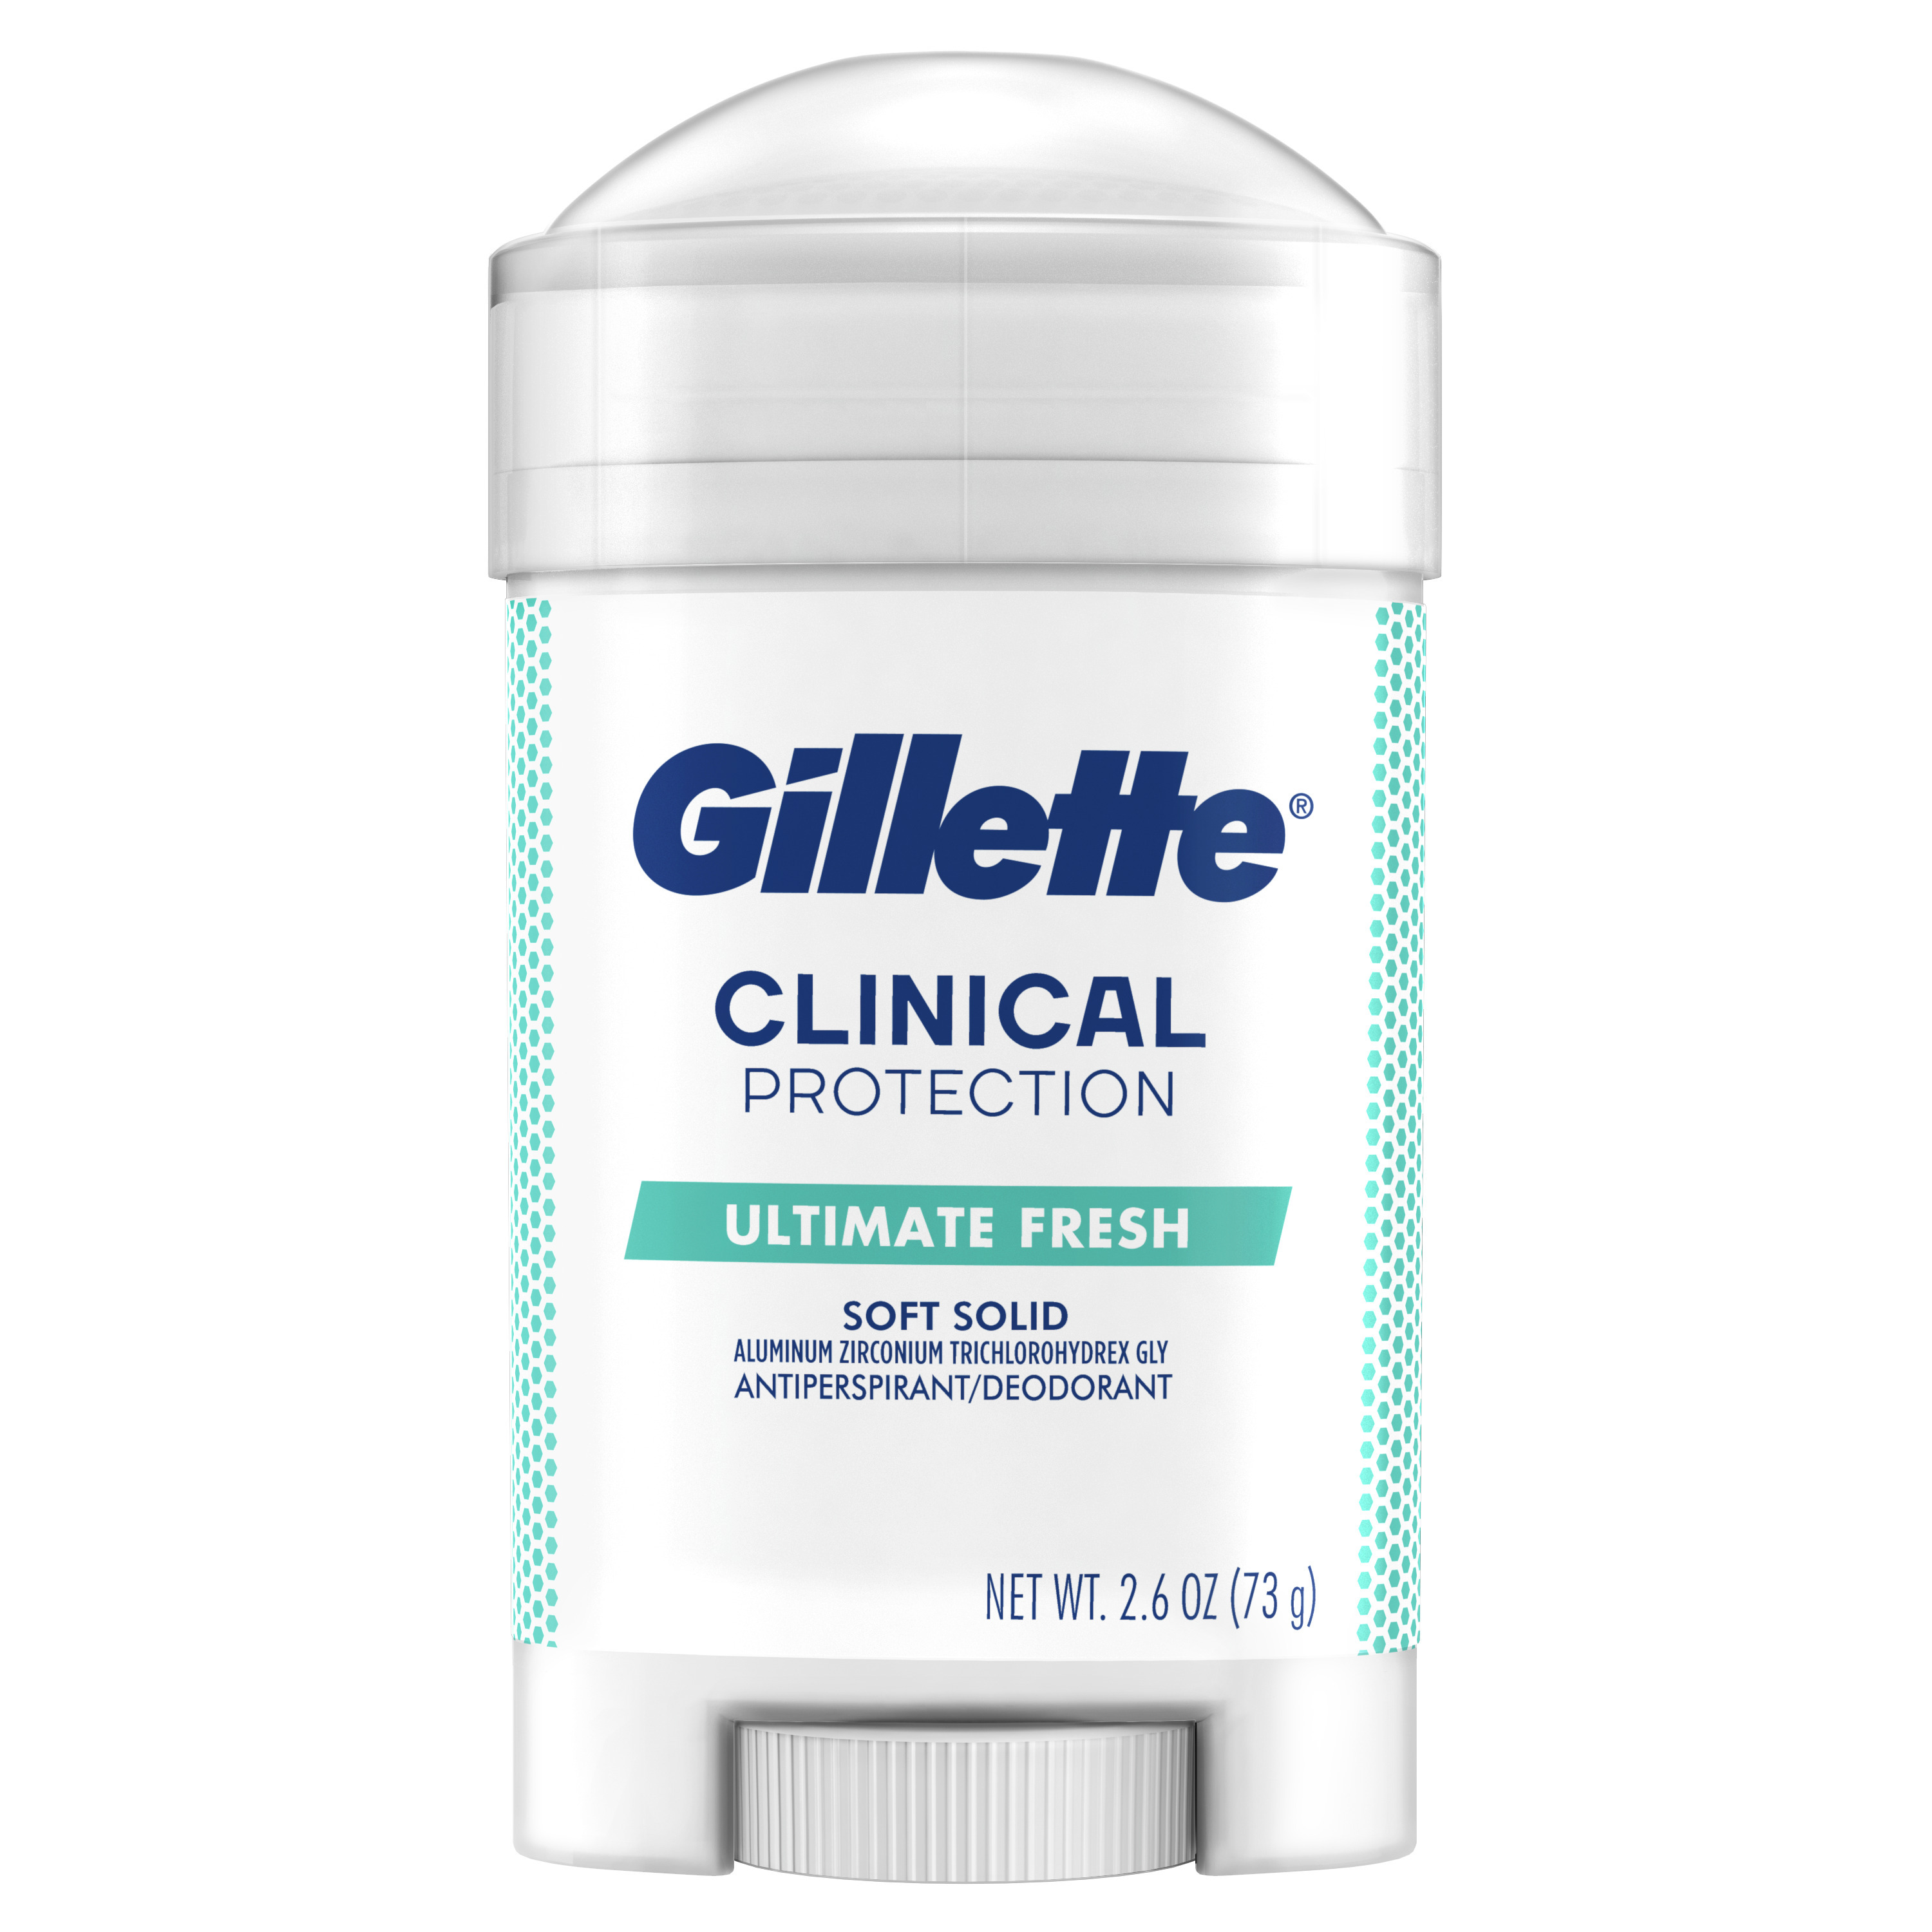 Gillette Antiperspirant Deodorant for Men, Clinical Soft Solid, Ultimate Fresh, 72 Hr. Sweat Protection, 2.6 oz - image 1 of 7